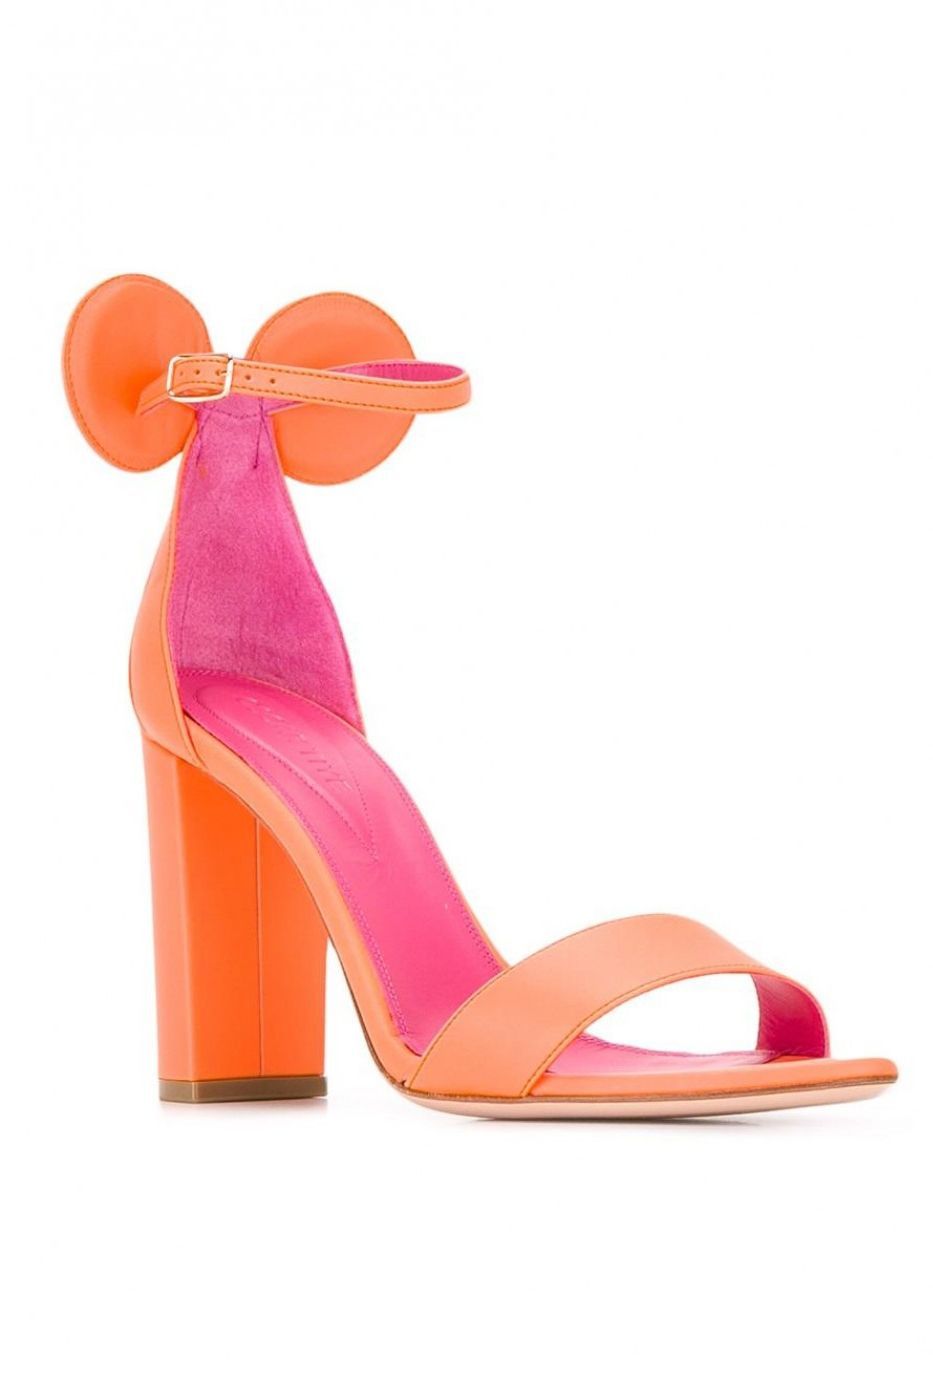 Footwear, Product, High heels, Sandal, Pink, Orange, Basic pump, Tan, Fashion, Peach, 